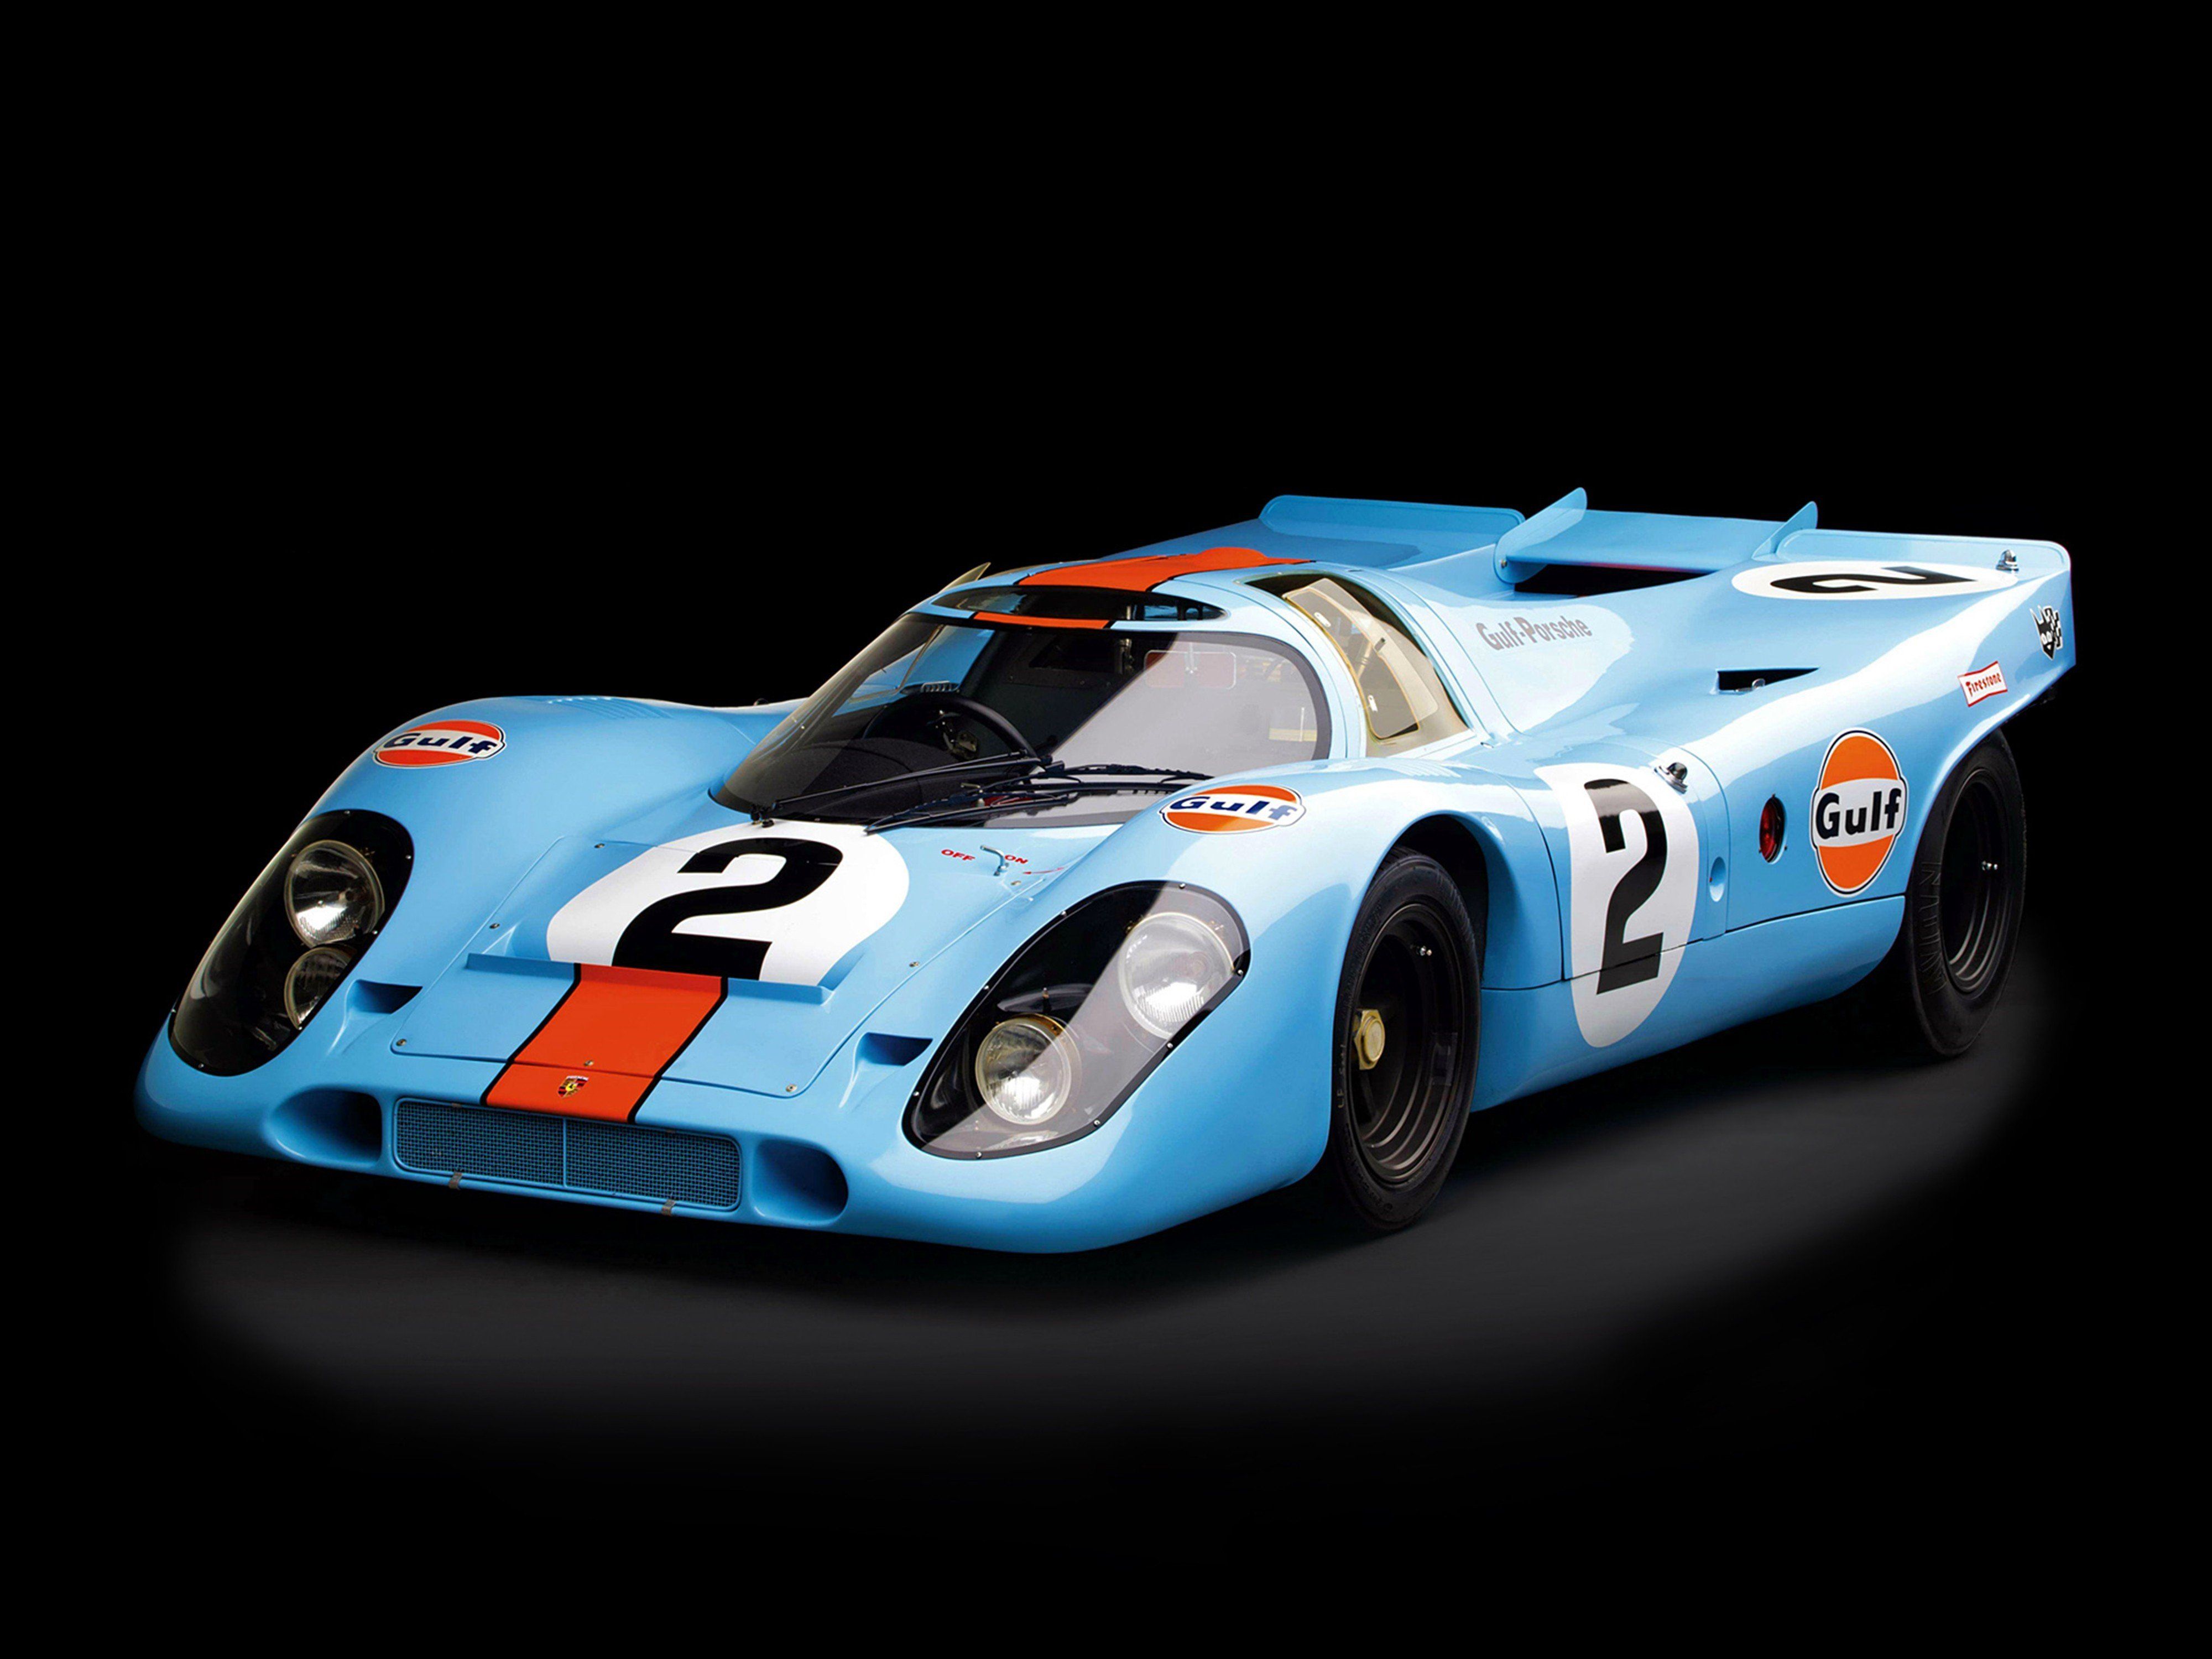 4000x3000 Porsche 917 Race Car Spercar Germany Racing Gulf Le Mans 4000x3000 Wallpaper 4000x3000